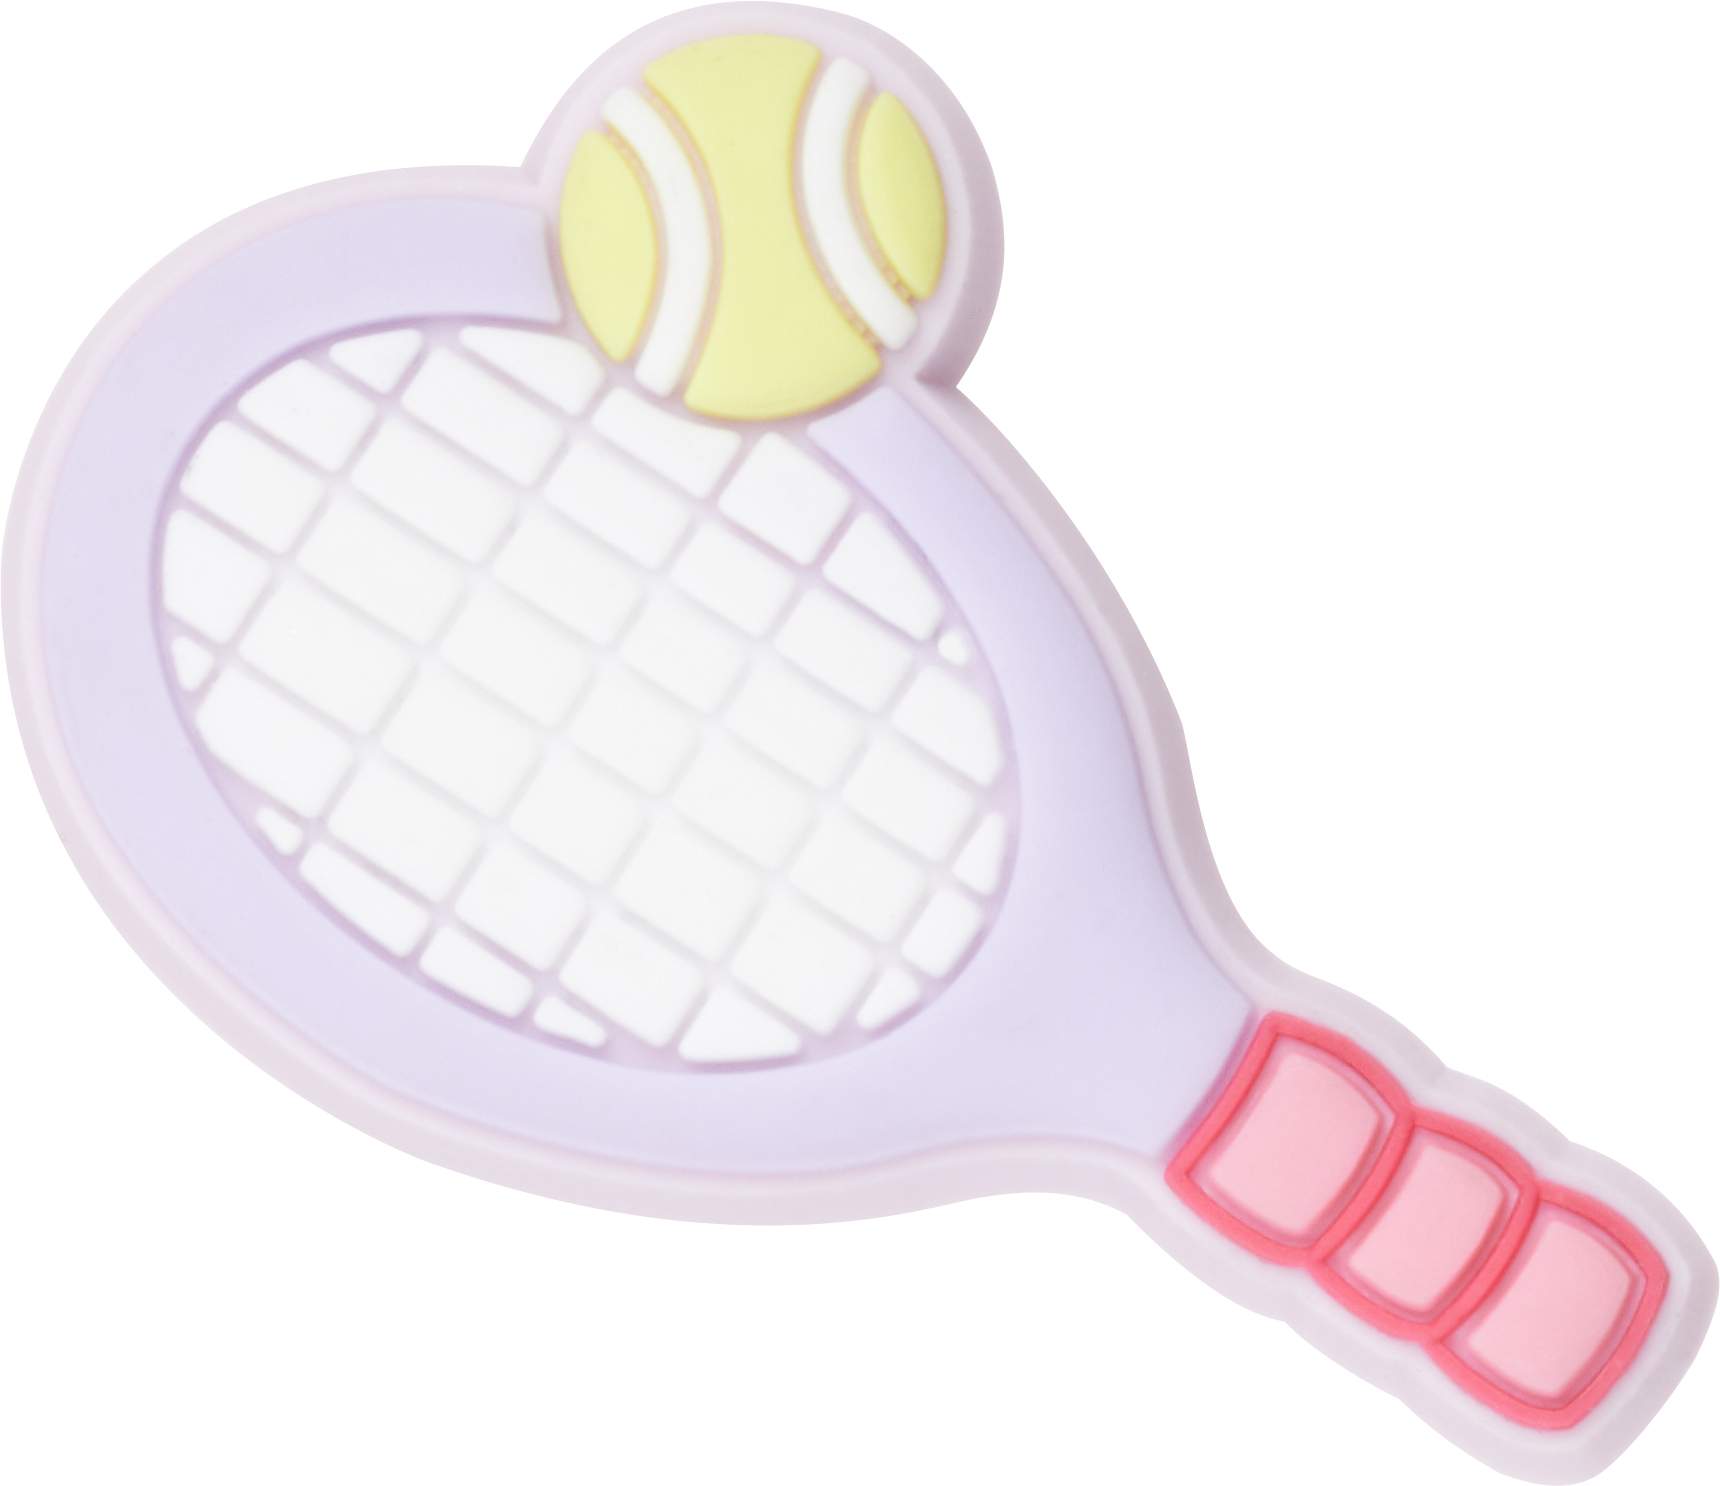 Tennis Racket Jibbitz Shoe Charm - Crocs